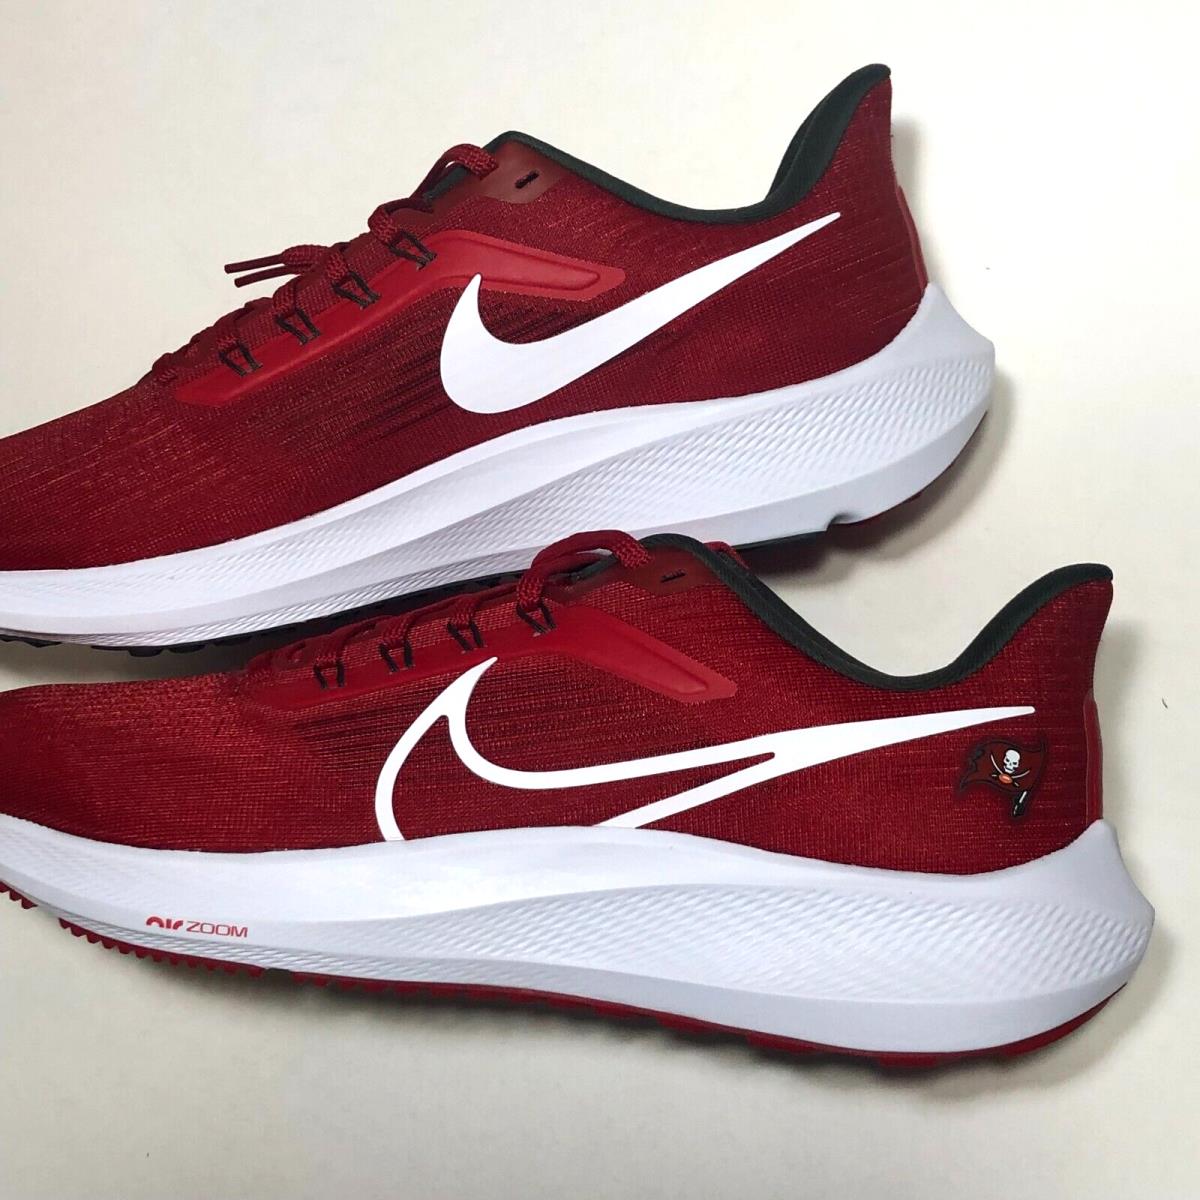 Nike shoes Air Zoom Pegasus - Red 12